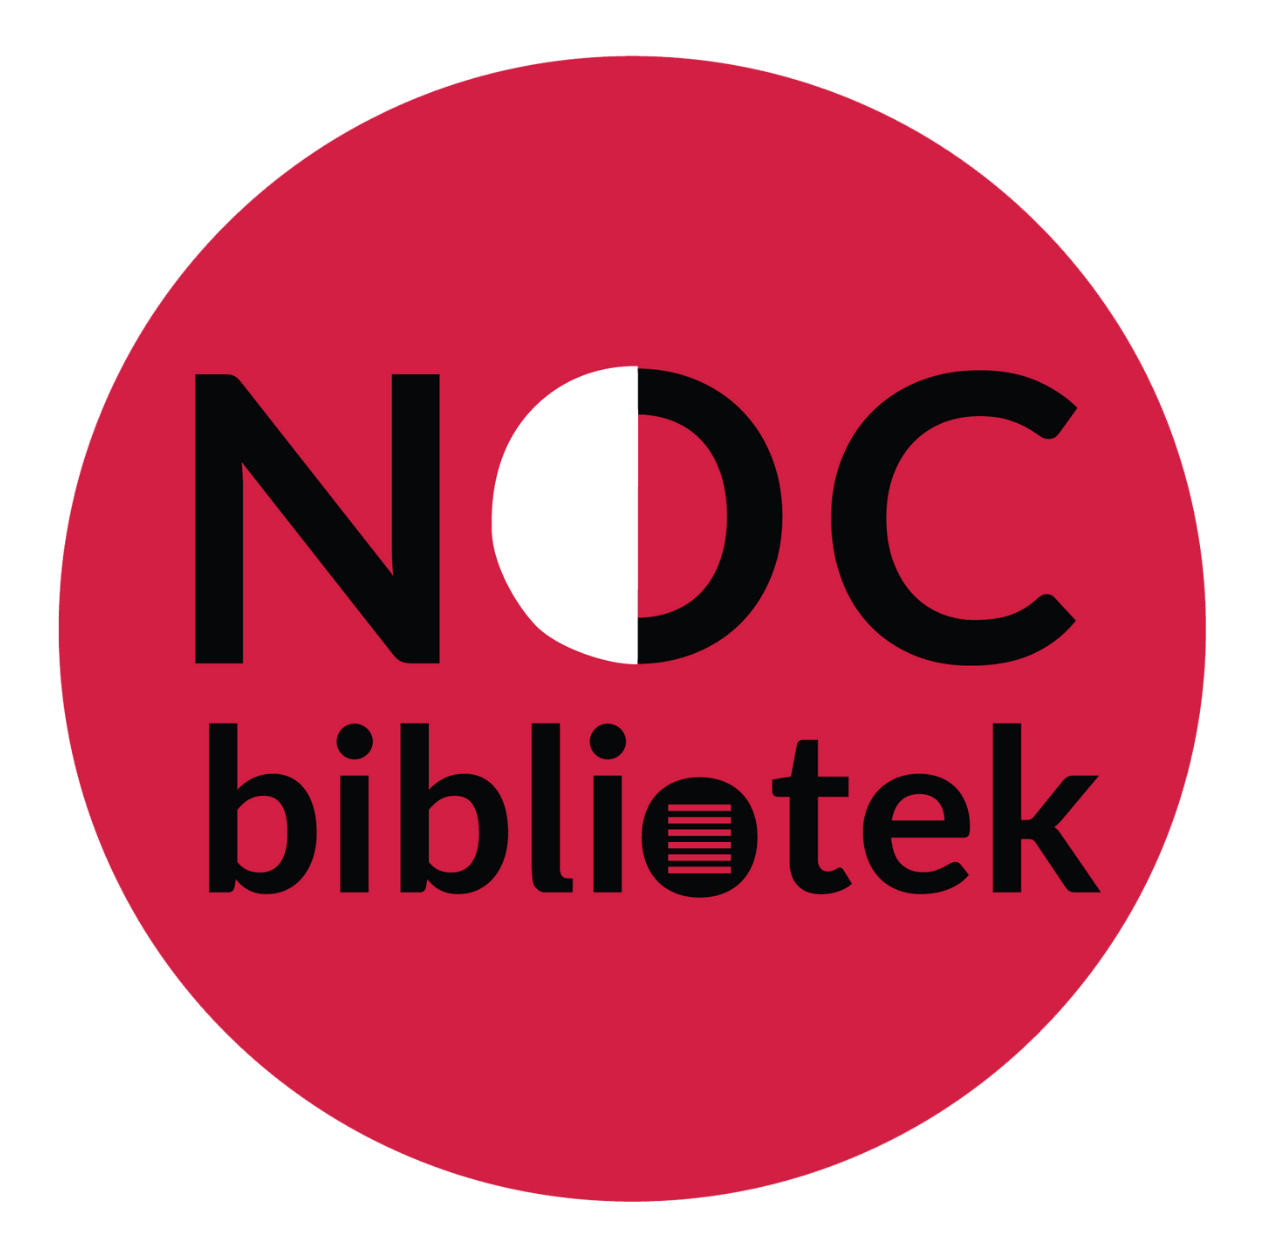 NB22_Logo-1.png (158 KB)